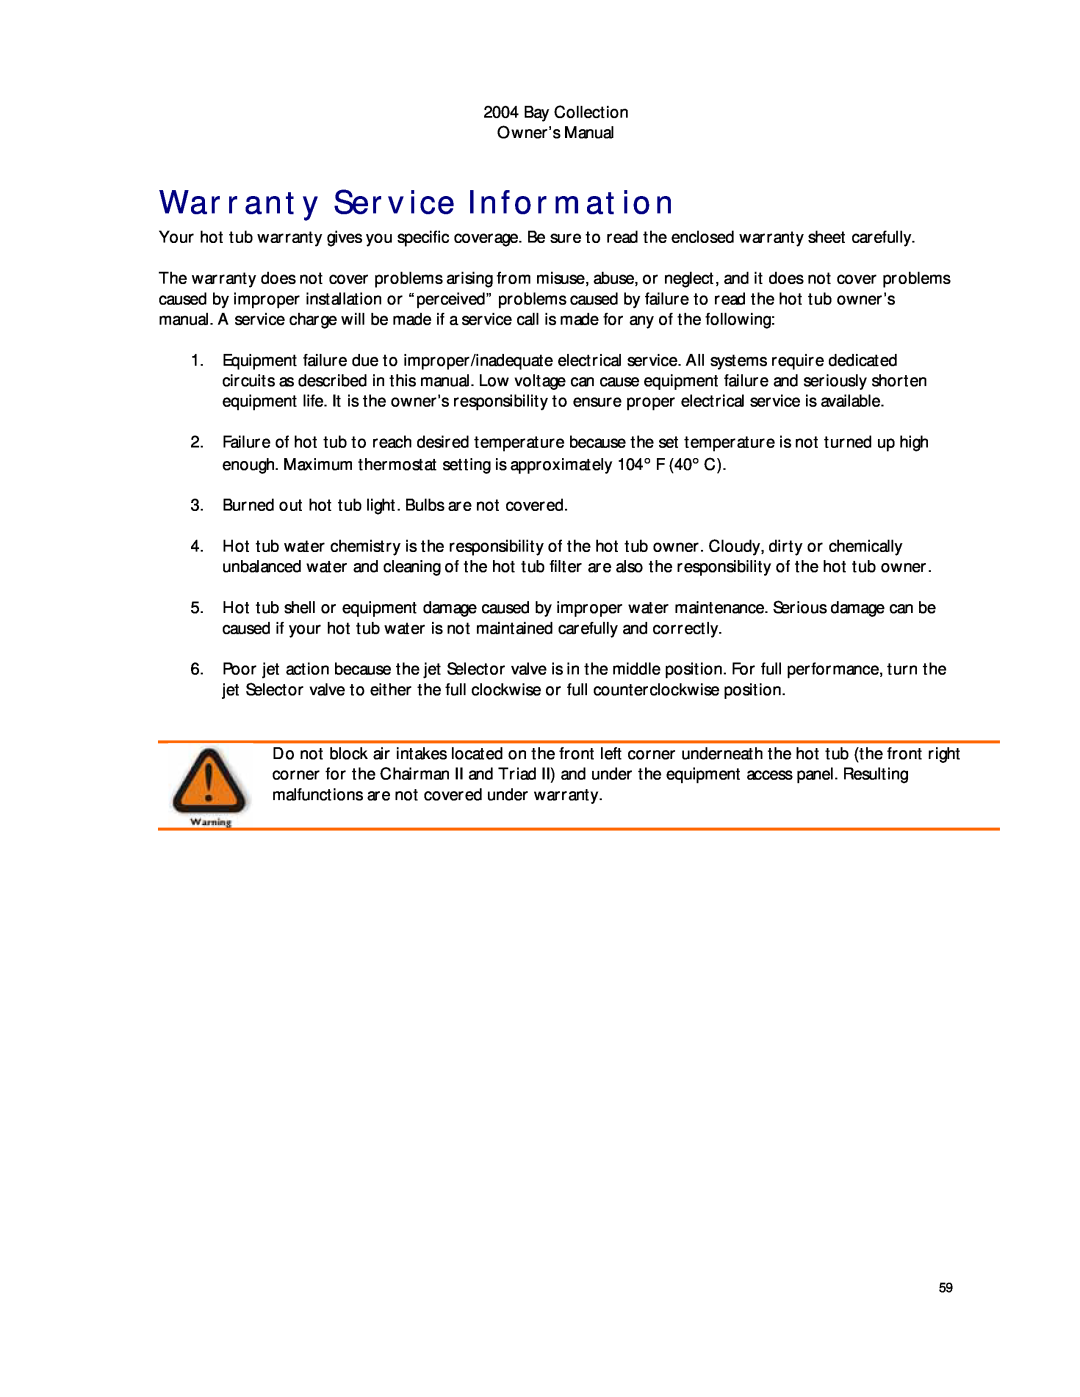 Dimension One Spas Bay Collection manual Warranty Service Information 